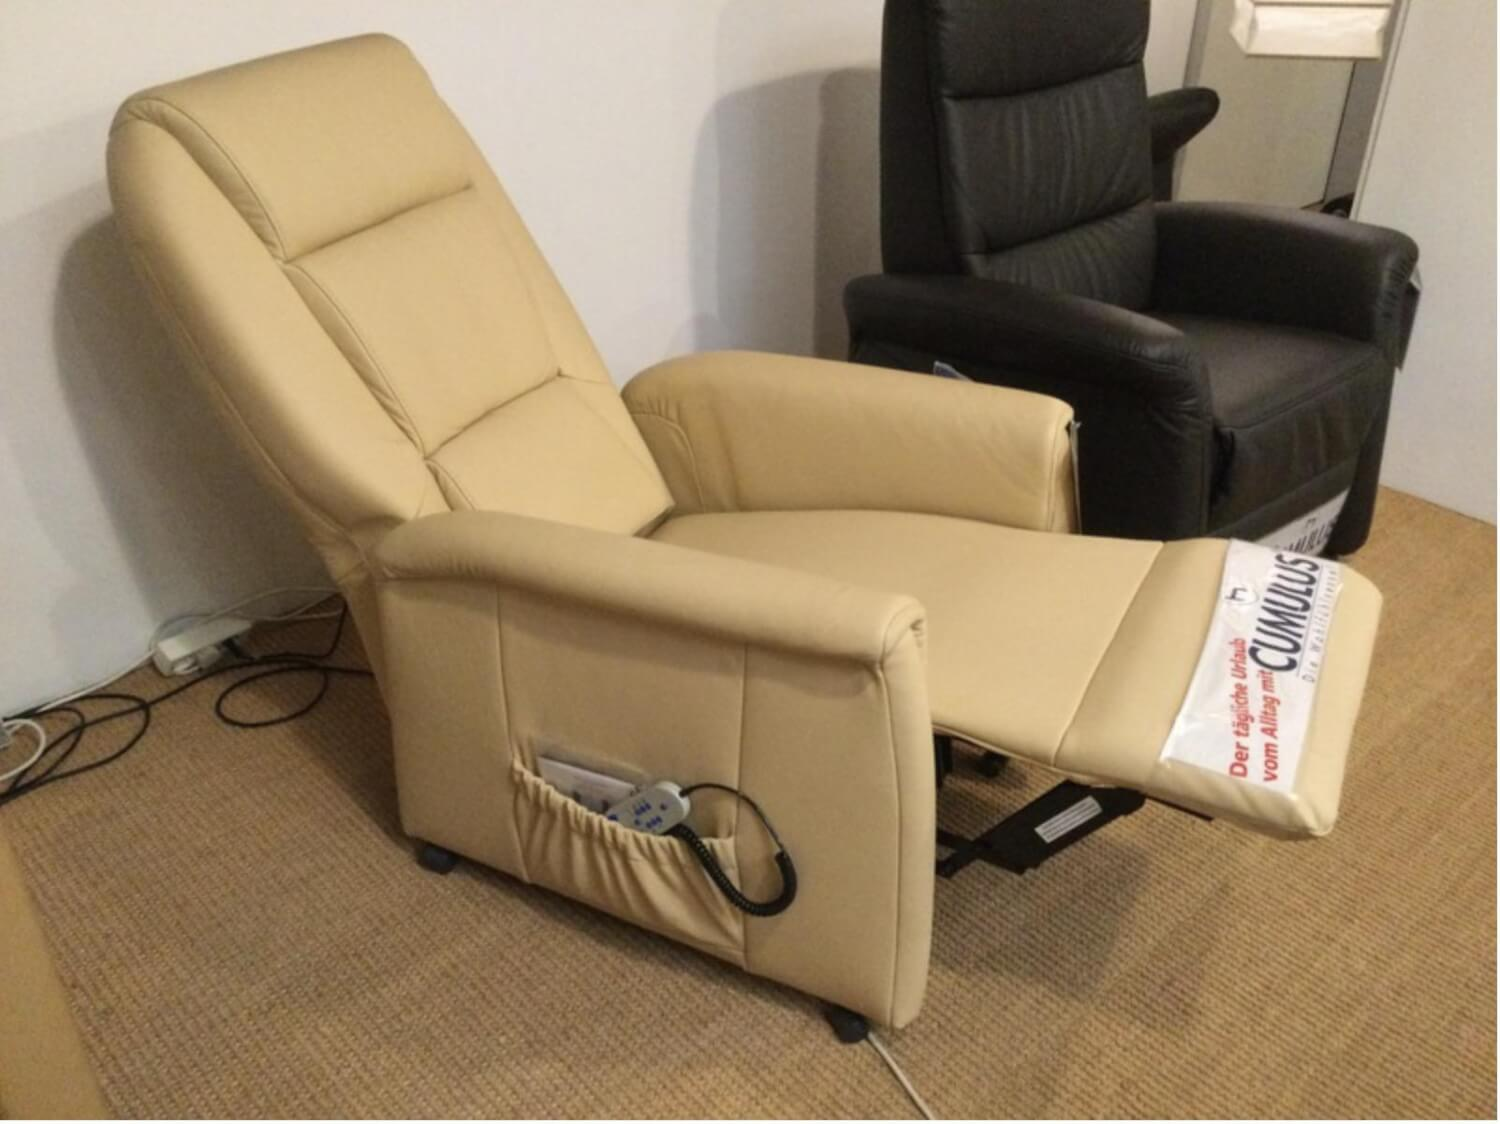 Massage-Sessel 9873 Bezug Leder LongLife Balsa Mit Kunststoffrollen Schwarz Und Relaxfunktion